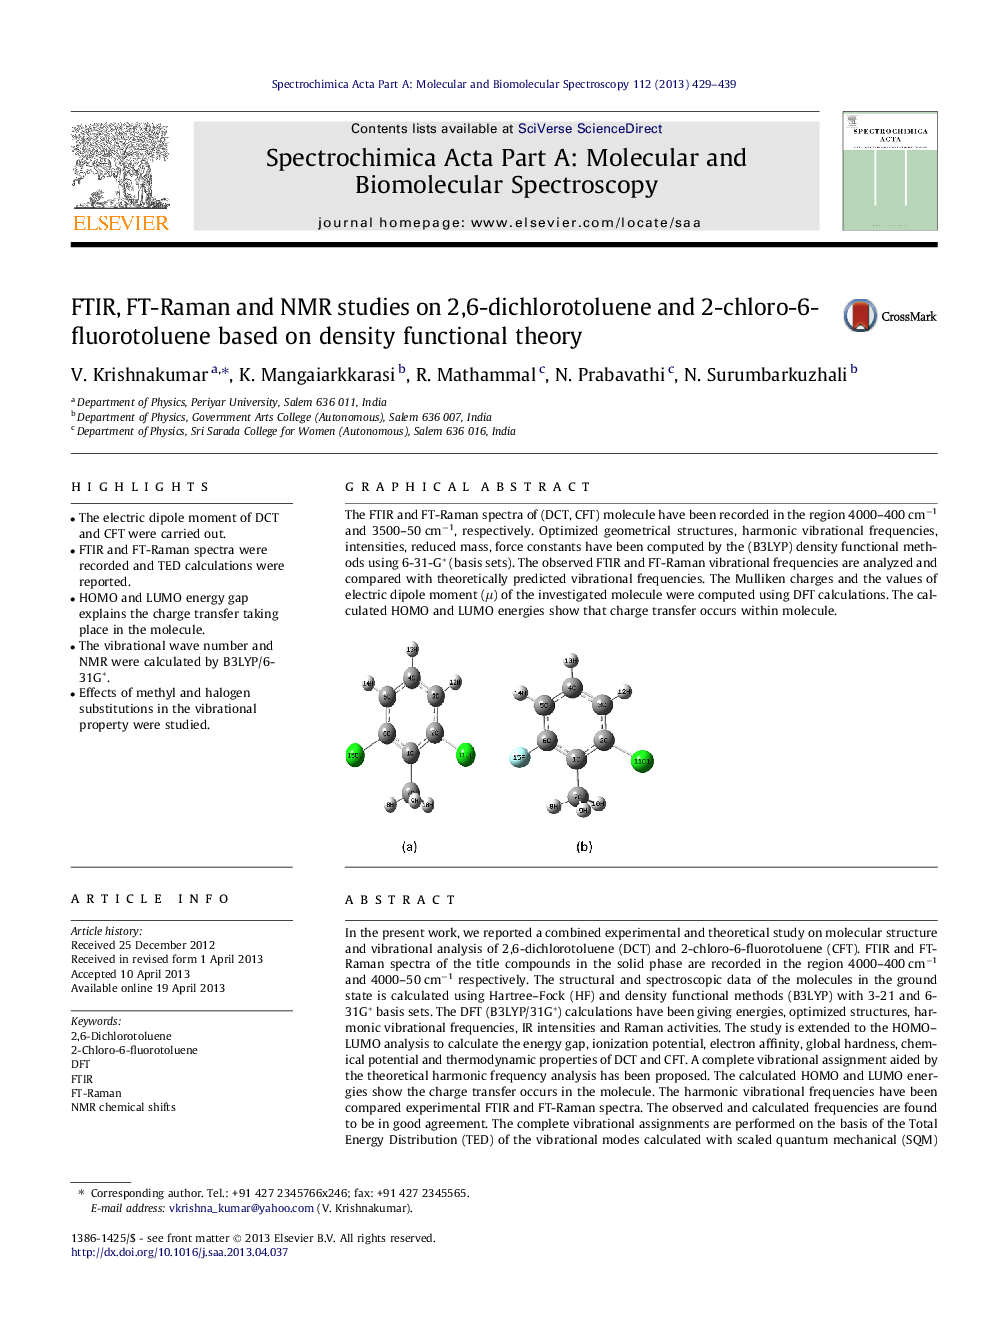 FTIR, FT-Raman and NMR studies on 2,6-dichlorotoluene and 2-chloro-6-fluorotoluene based on density functional theory